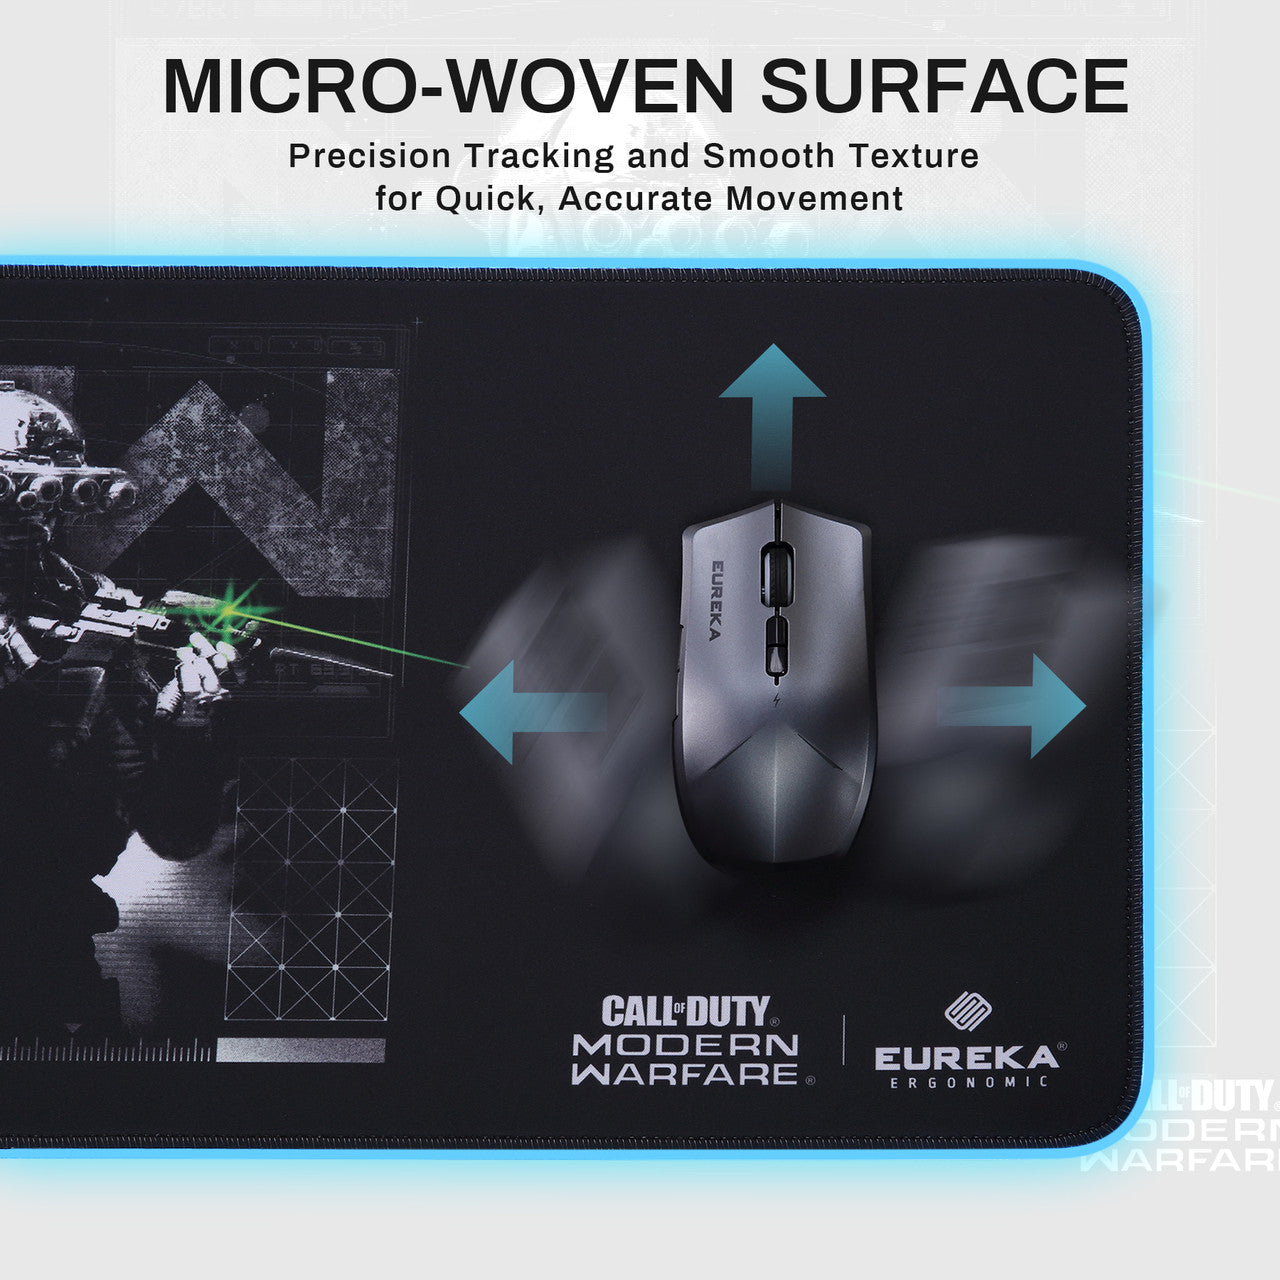 Eureka Ergonomic Large Mouse Pad- Wireless Charging, Call Of Duty Series